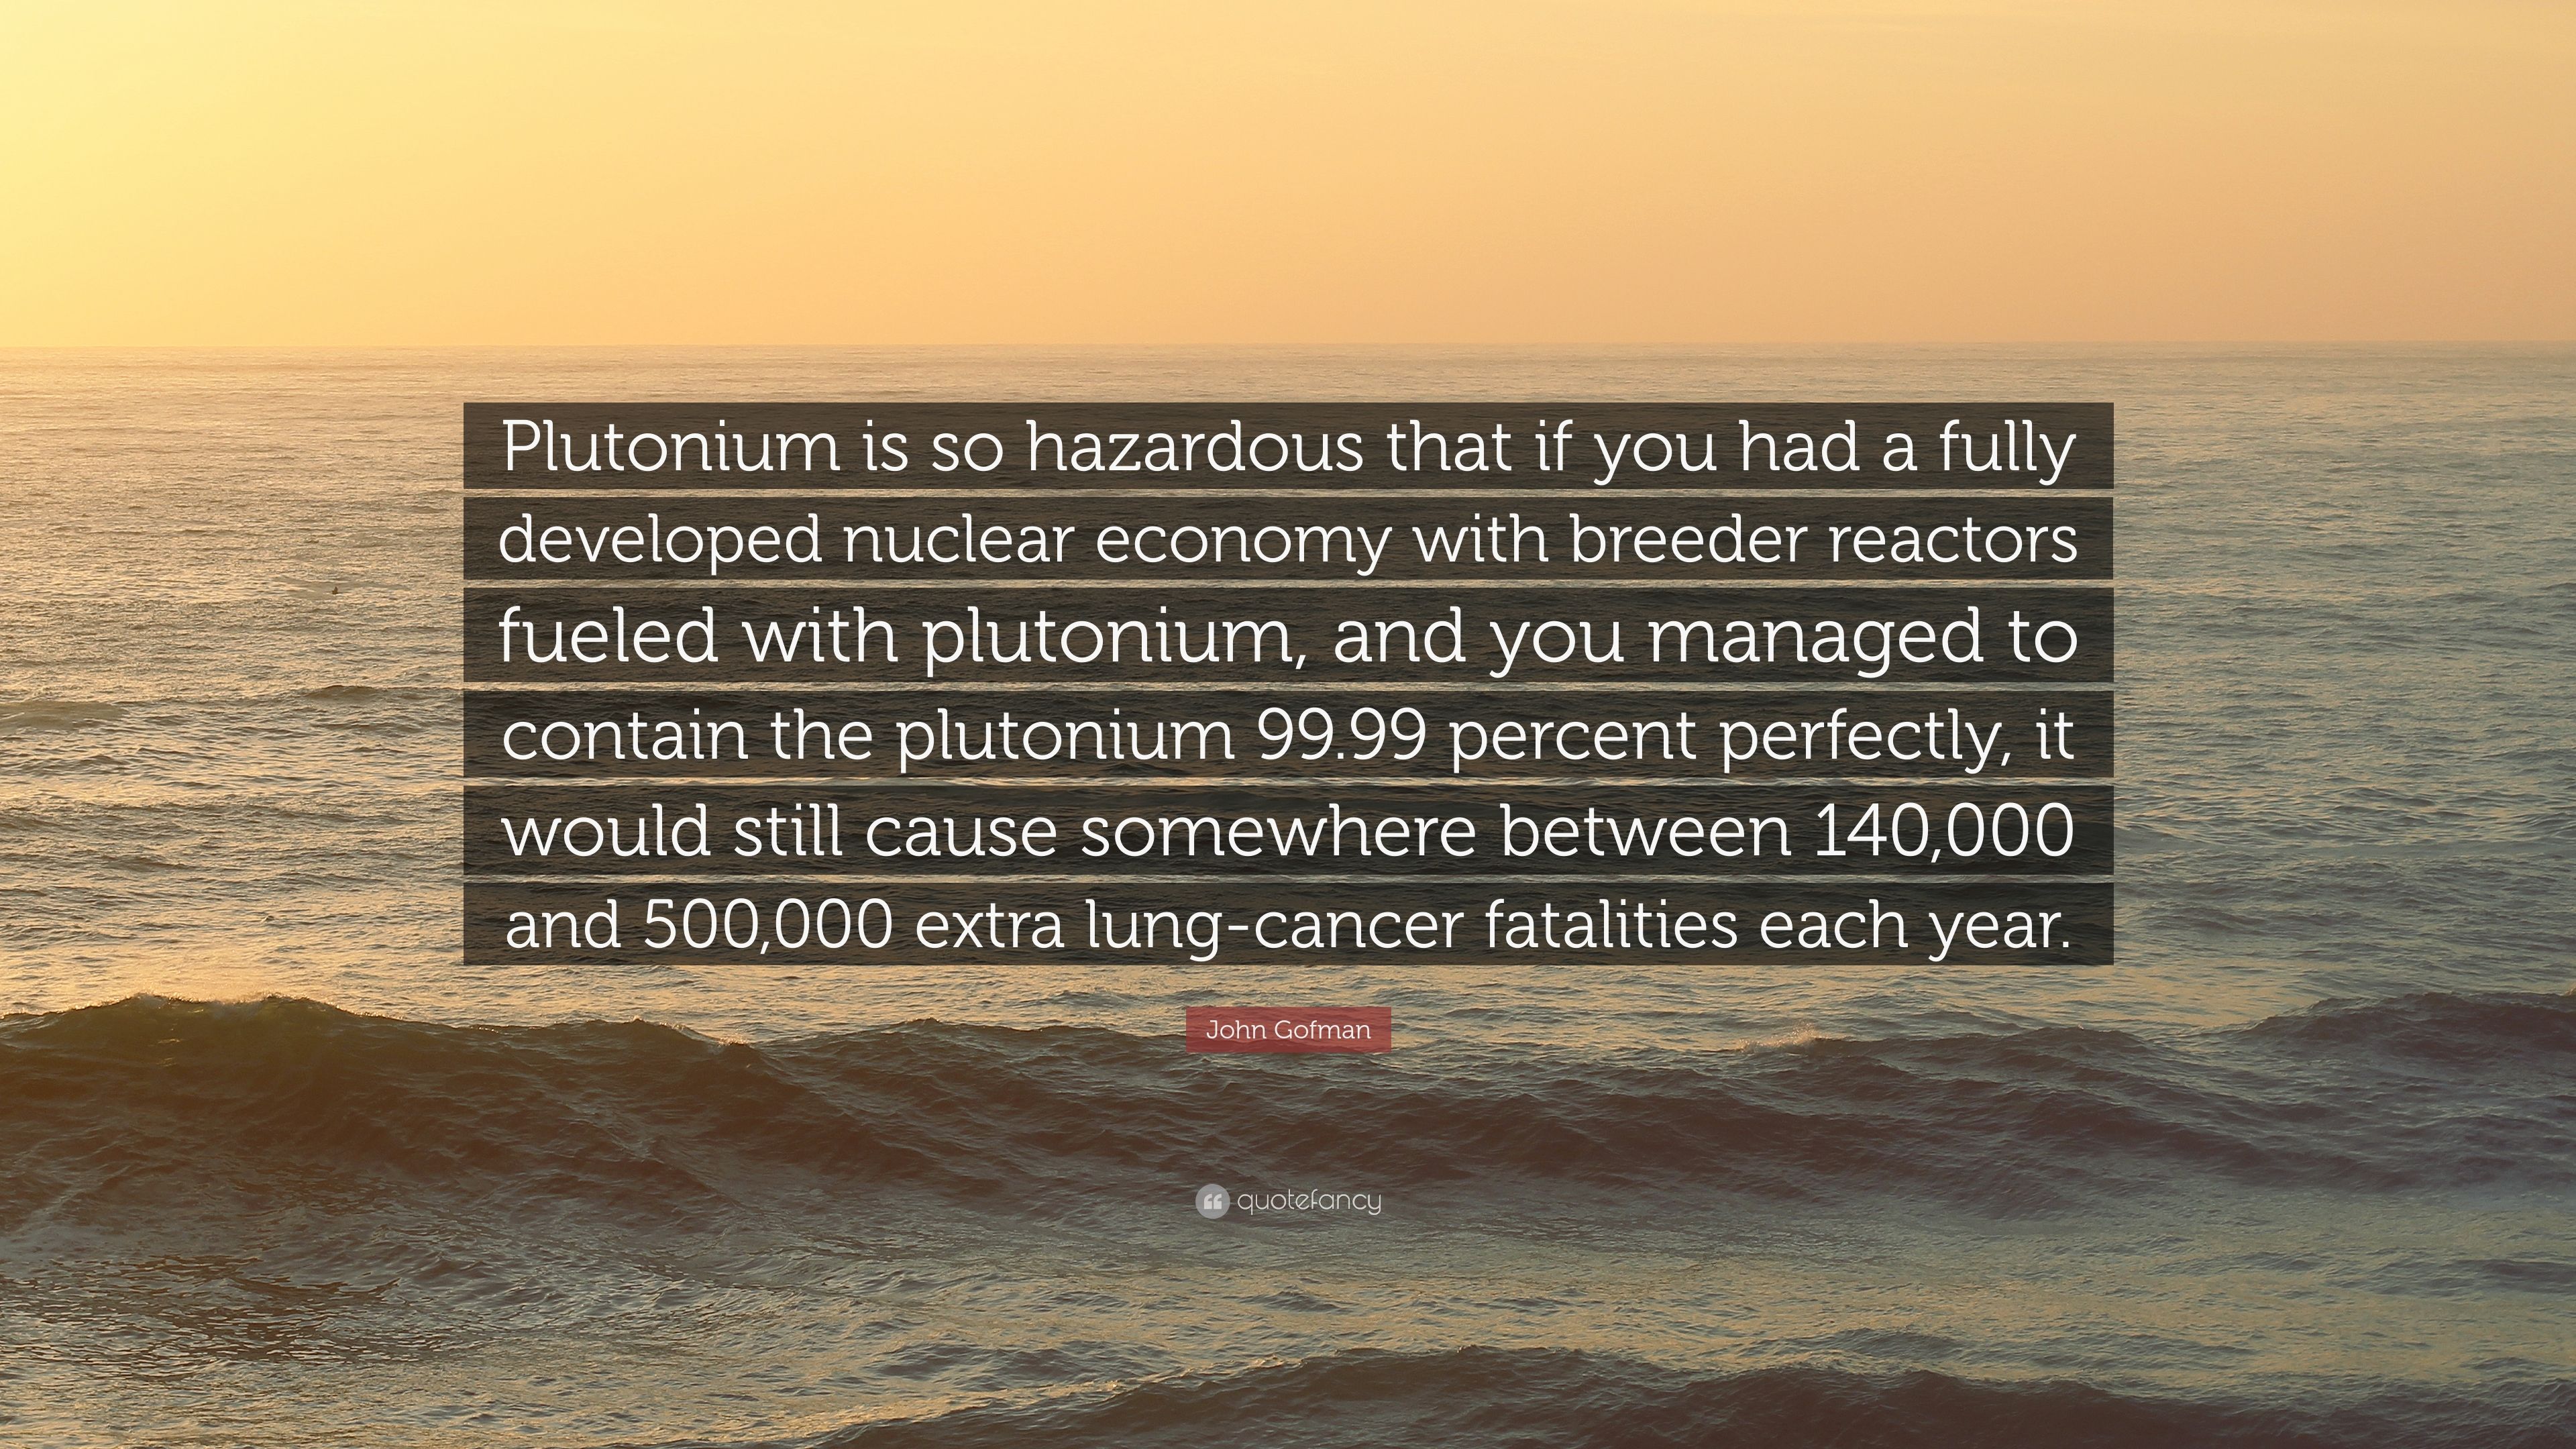 John Gofman Quote: “Plutonium is so hazardous that if you